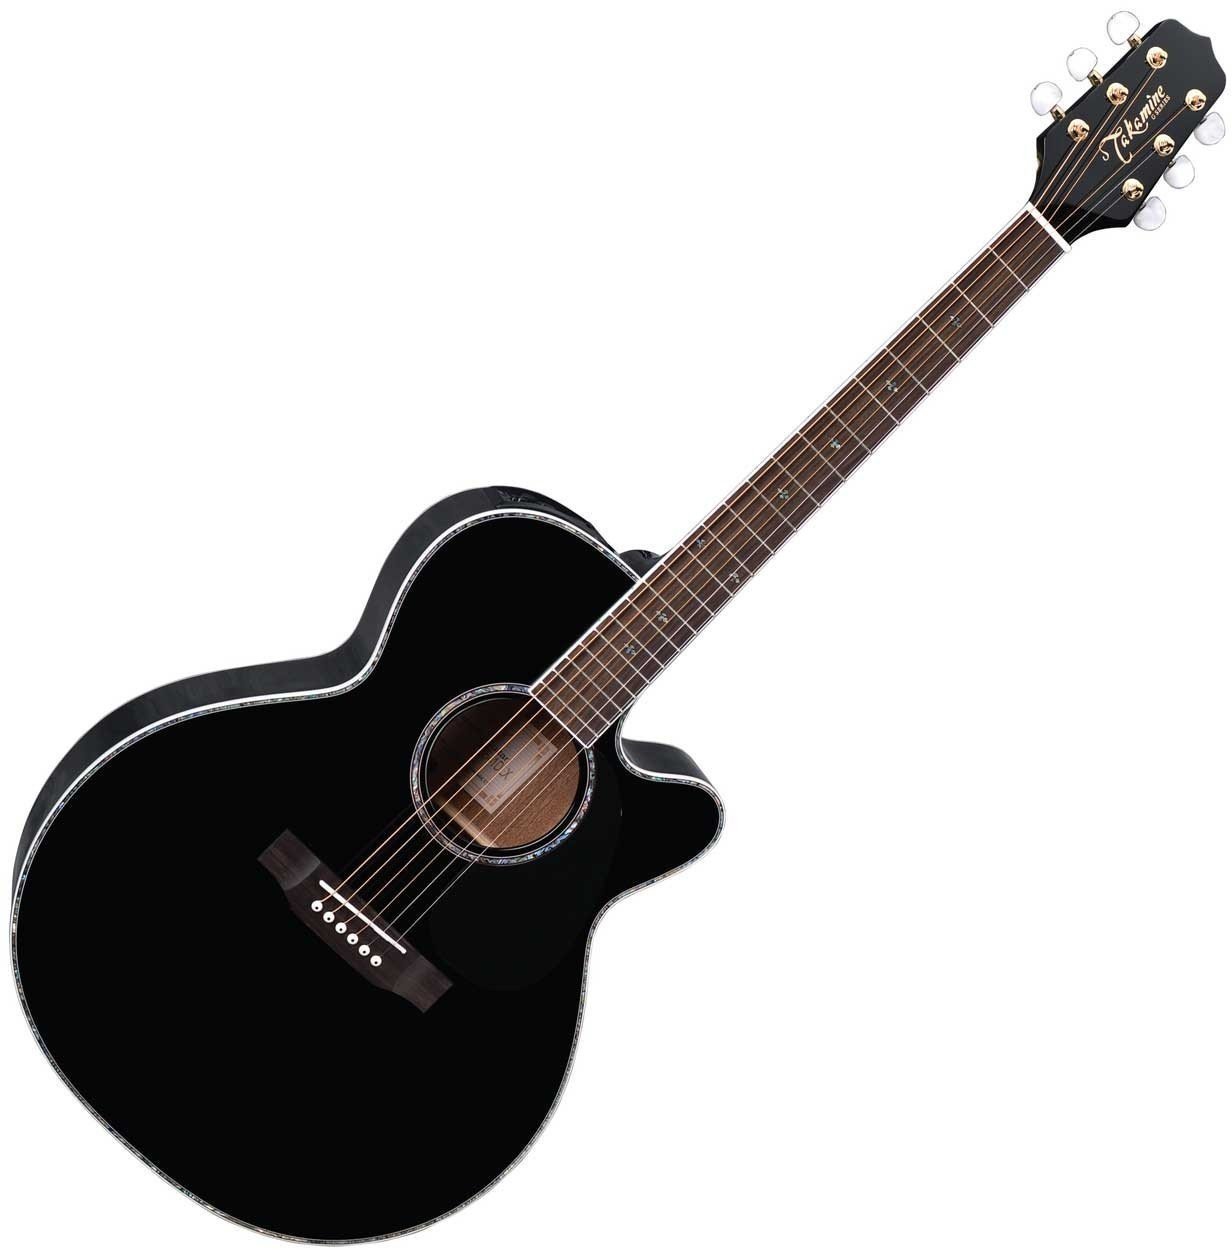 Jumbo elektro-akoestische gitaar Takamine EG 541 DLX